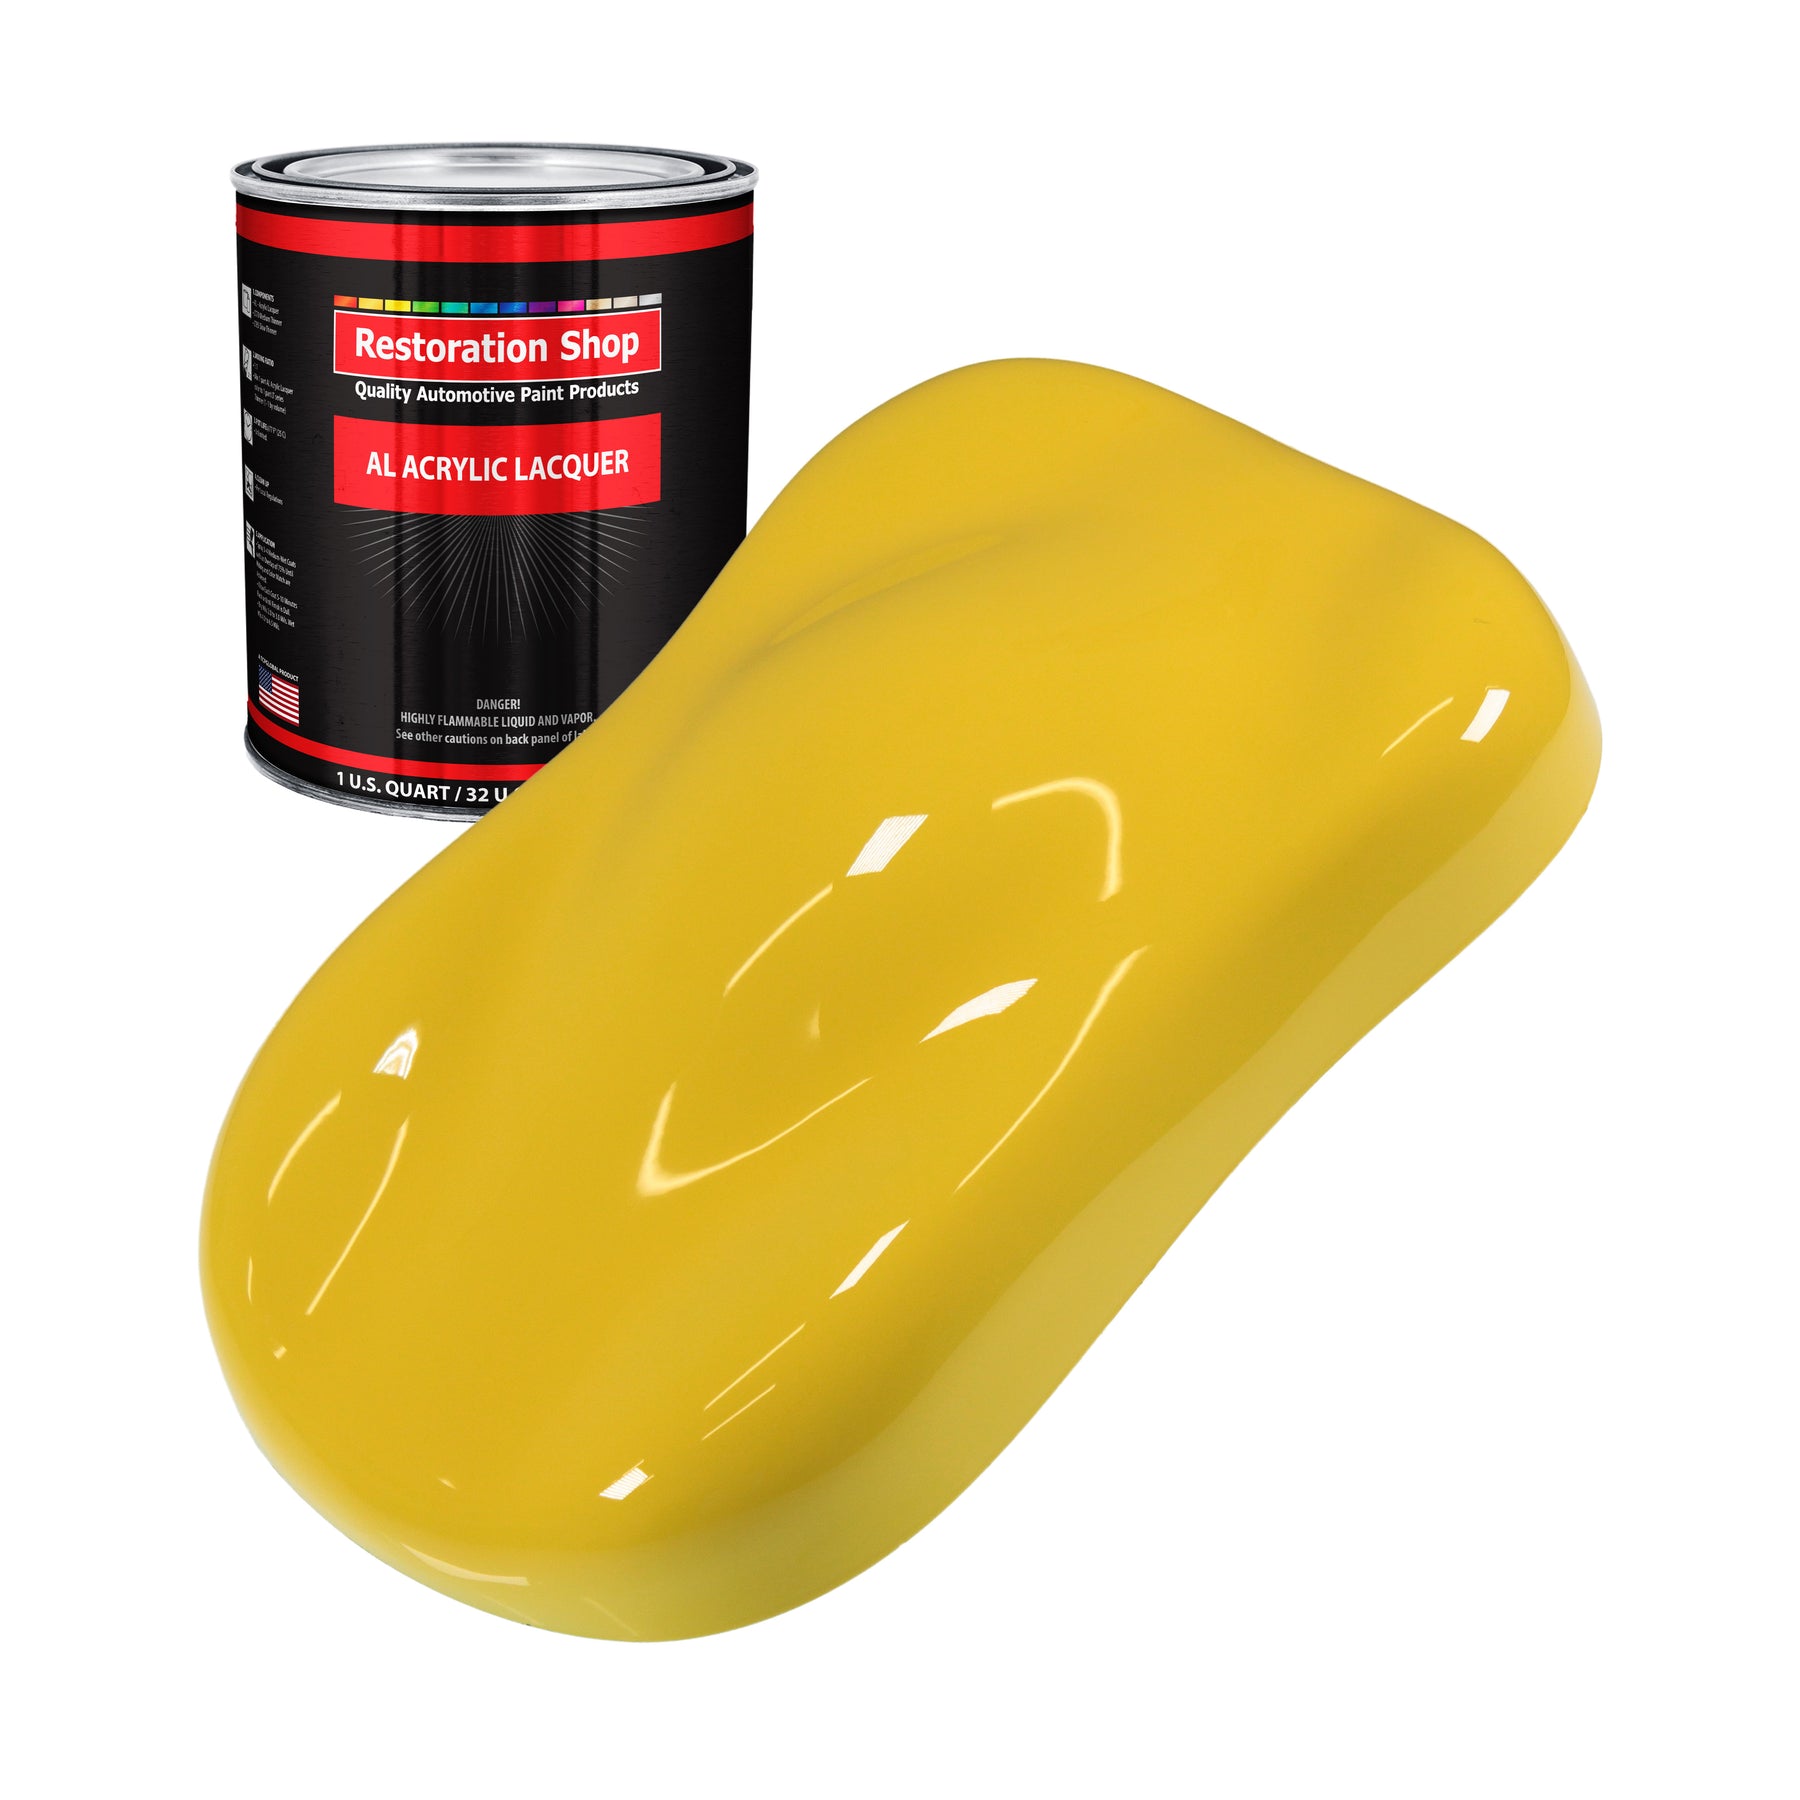 Restoration Shop - Daytona Yellow Acrylic Lacquer Auto Paint - Complete Quart Paint Kit with Medium Thinner